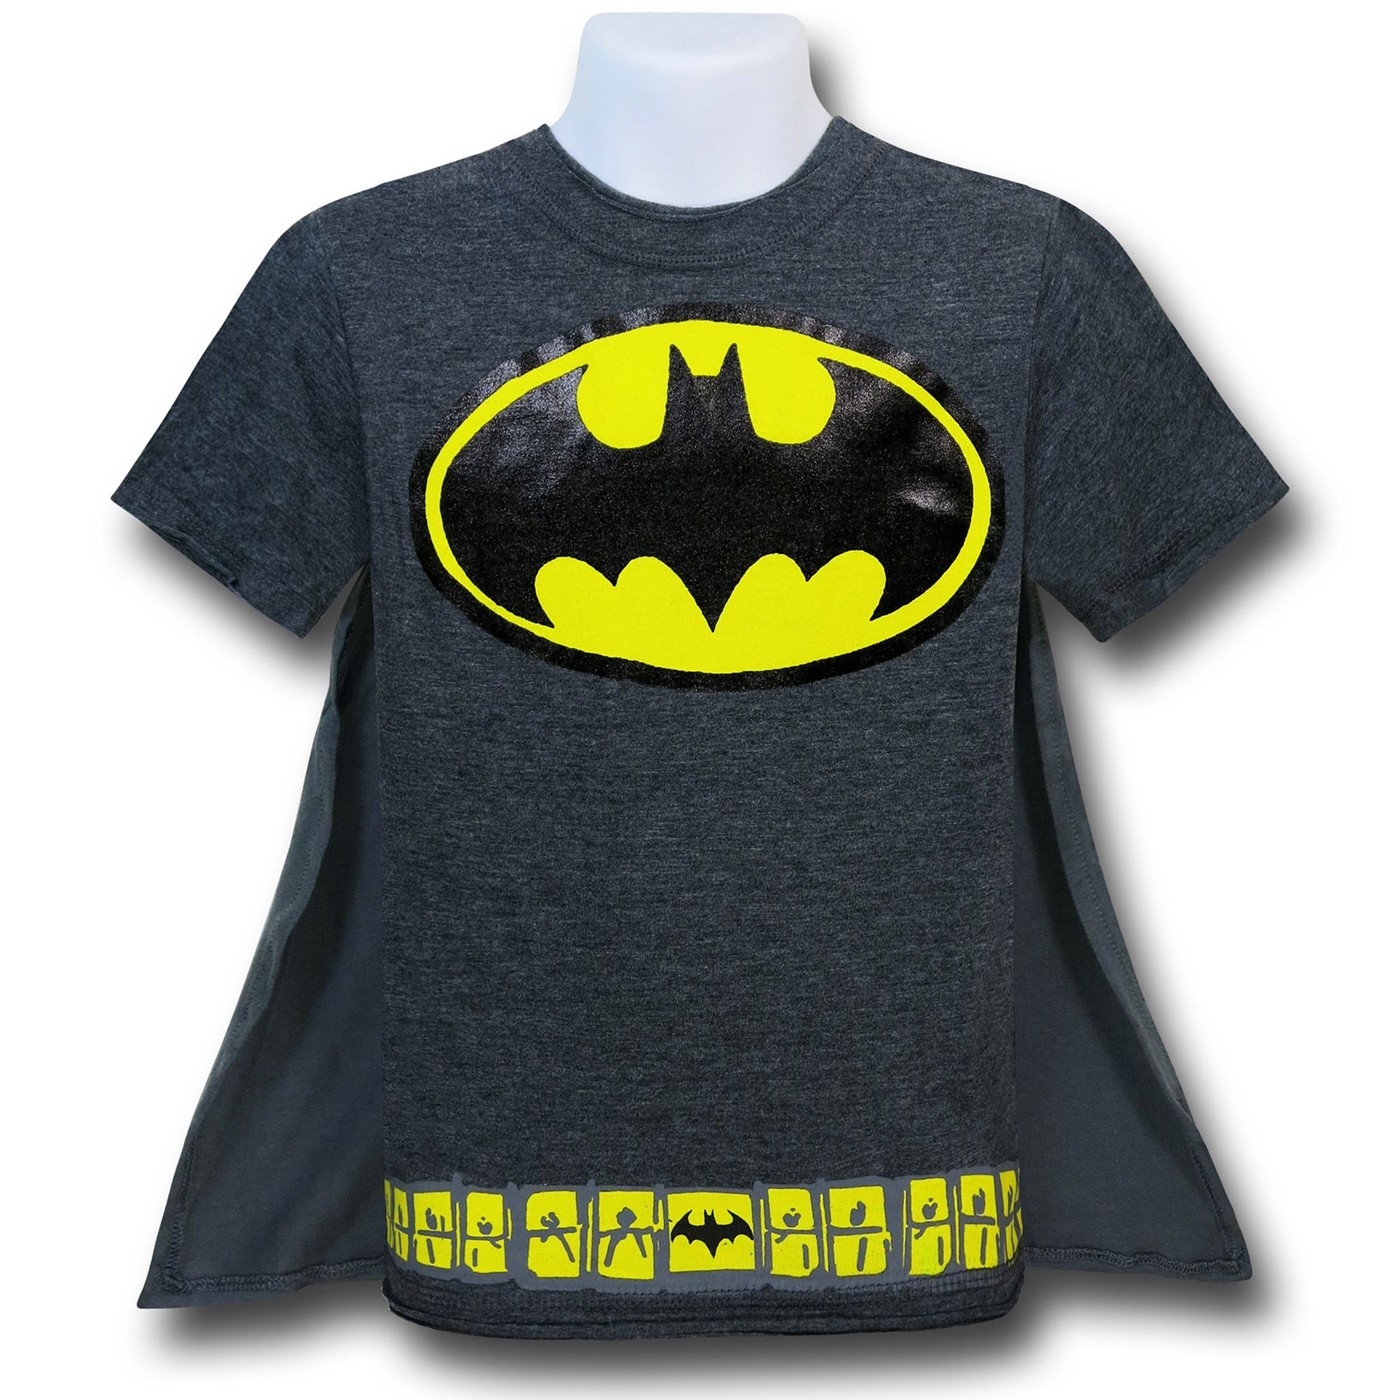 Batman Kids Costume T-Shirt w/Grey Cape